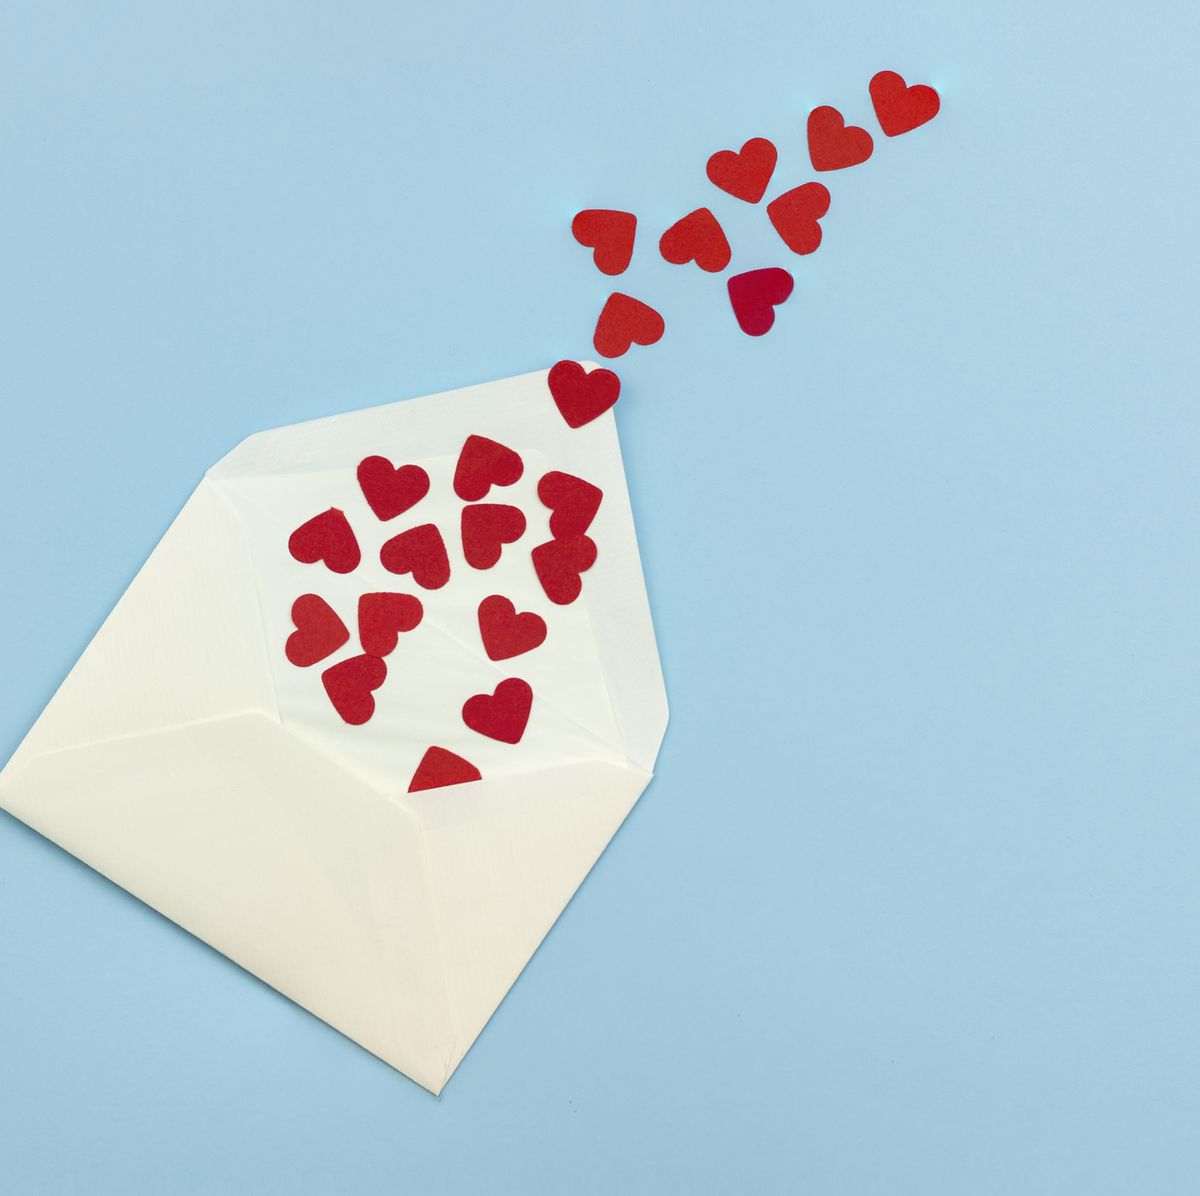  90 Pieces Heart Cutouts Paper Hearts Heart Shape Cards